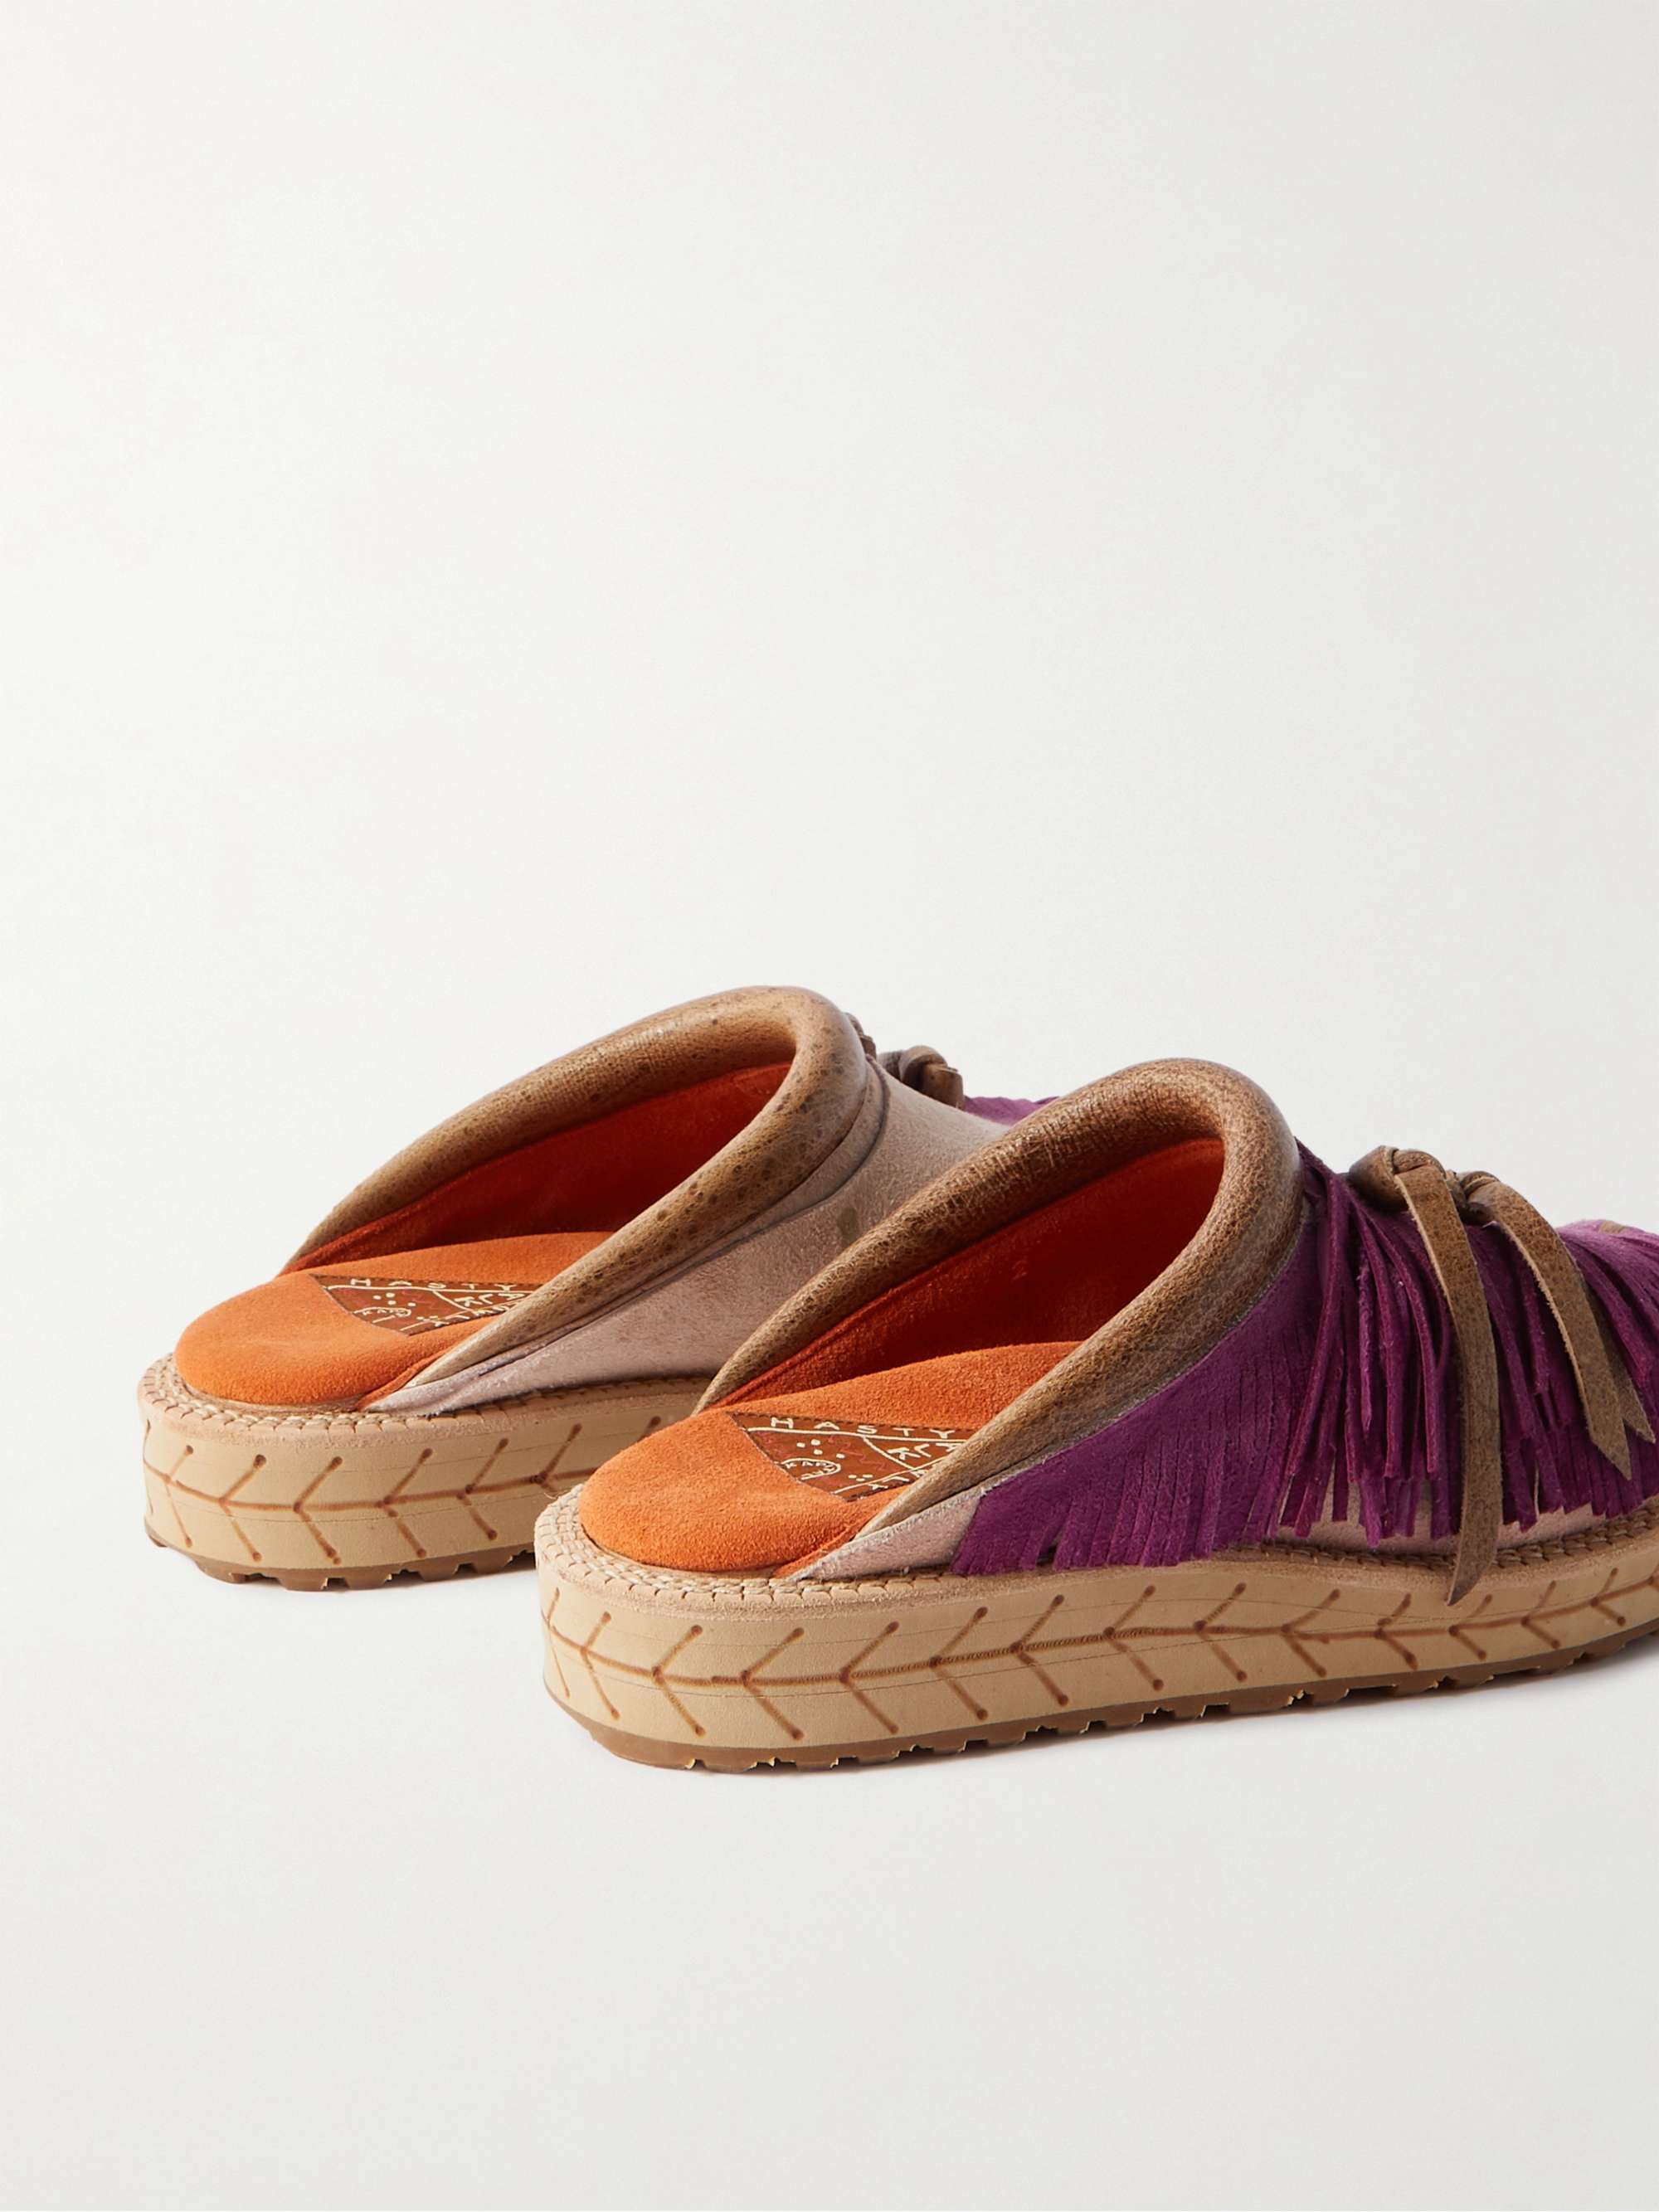 KAPITAL Fringed Leather-Trimmed Suede Sandals